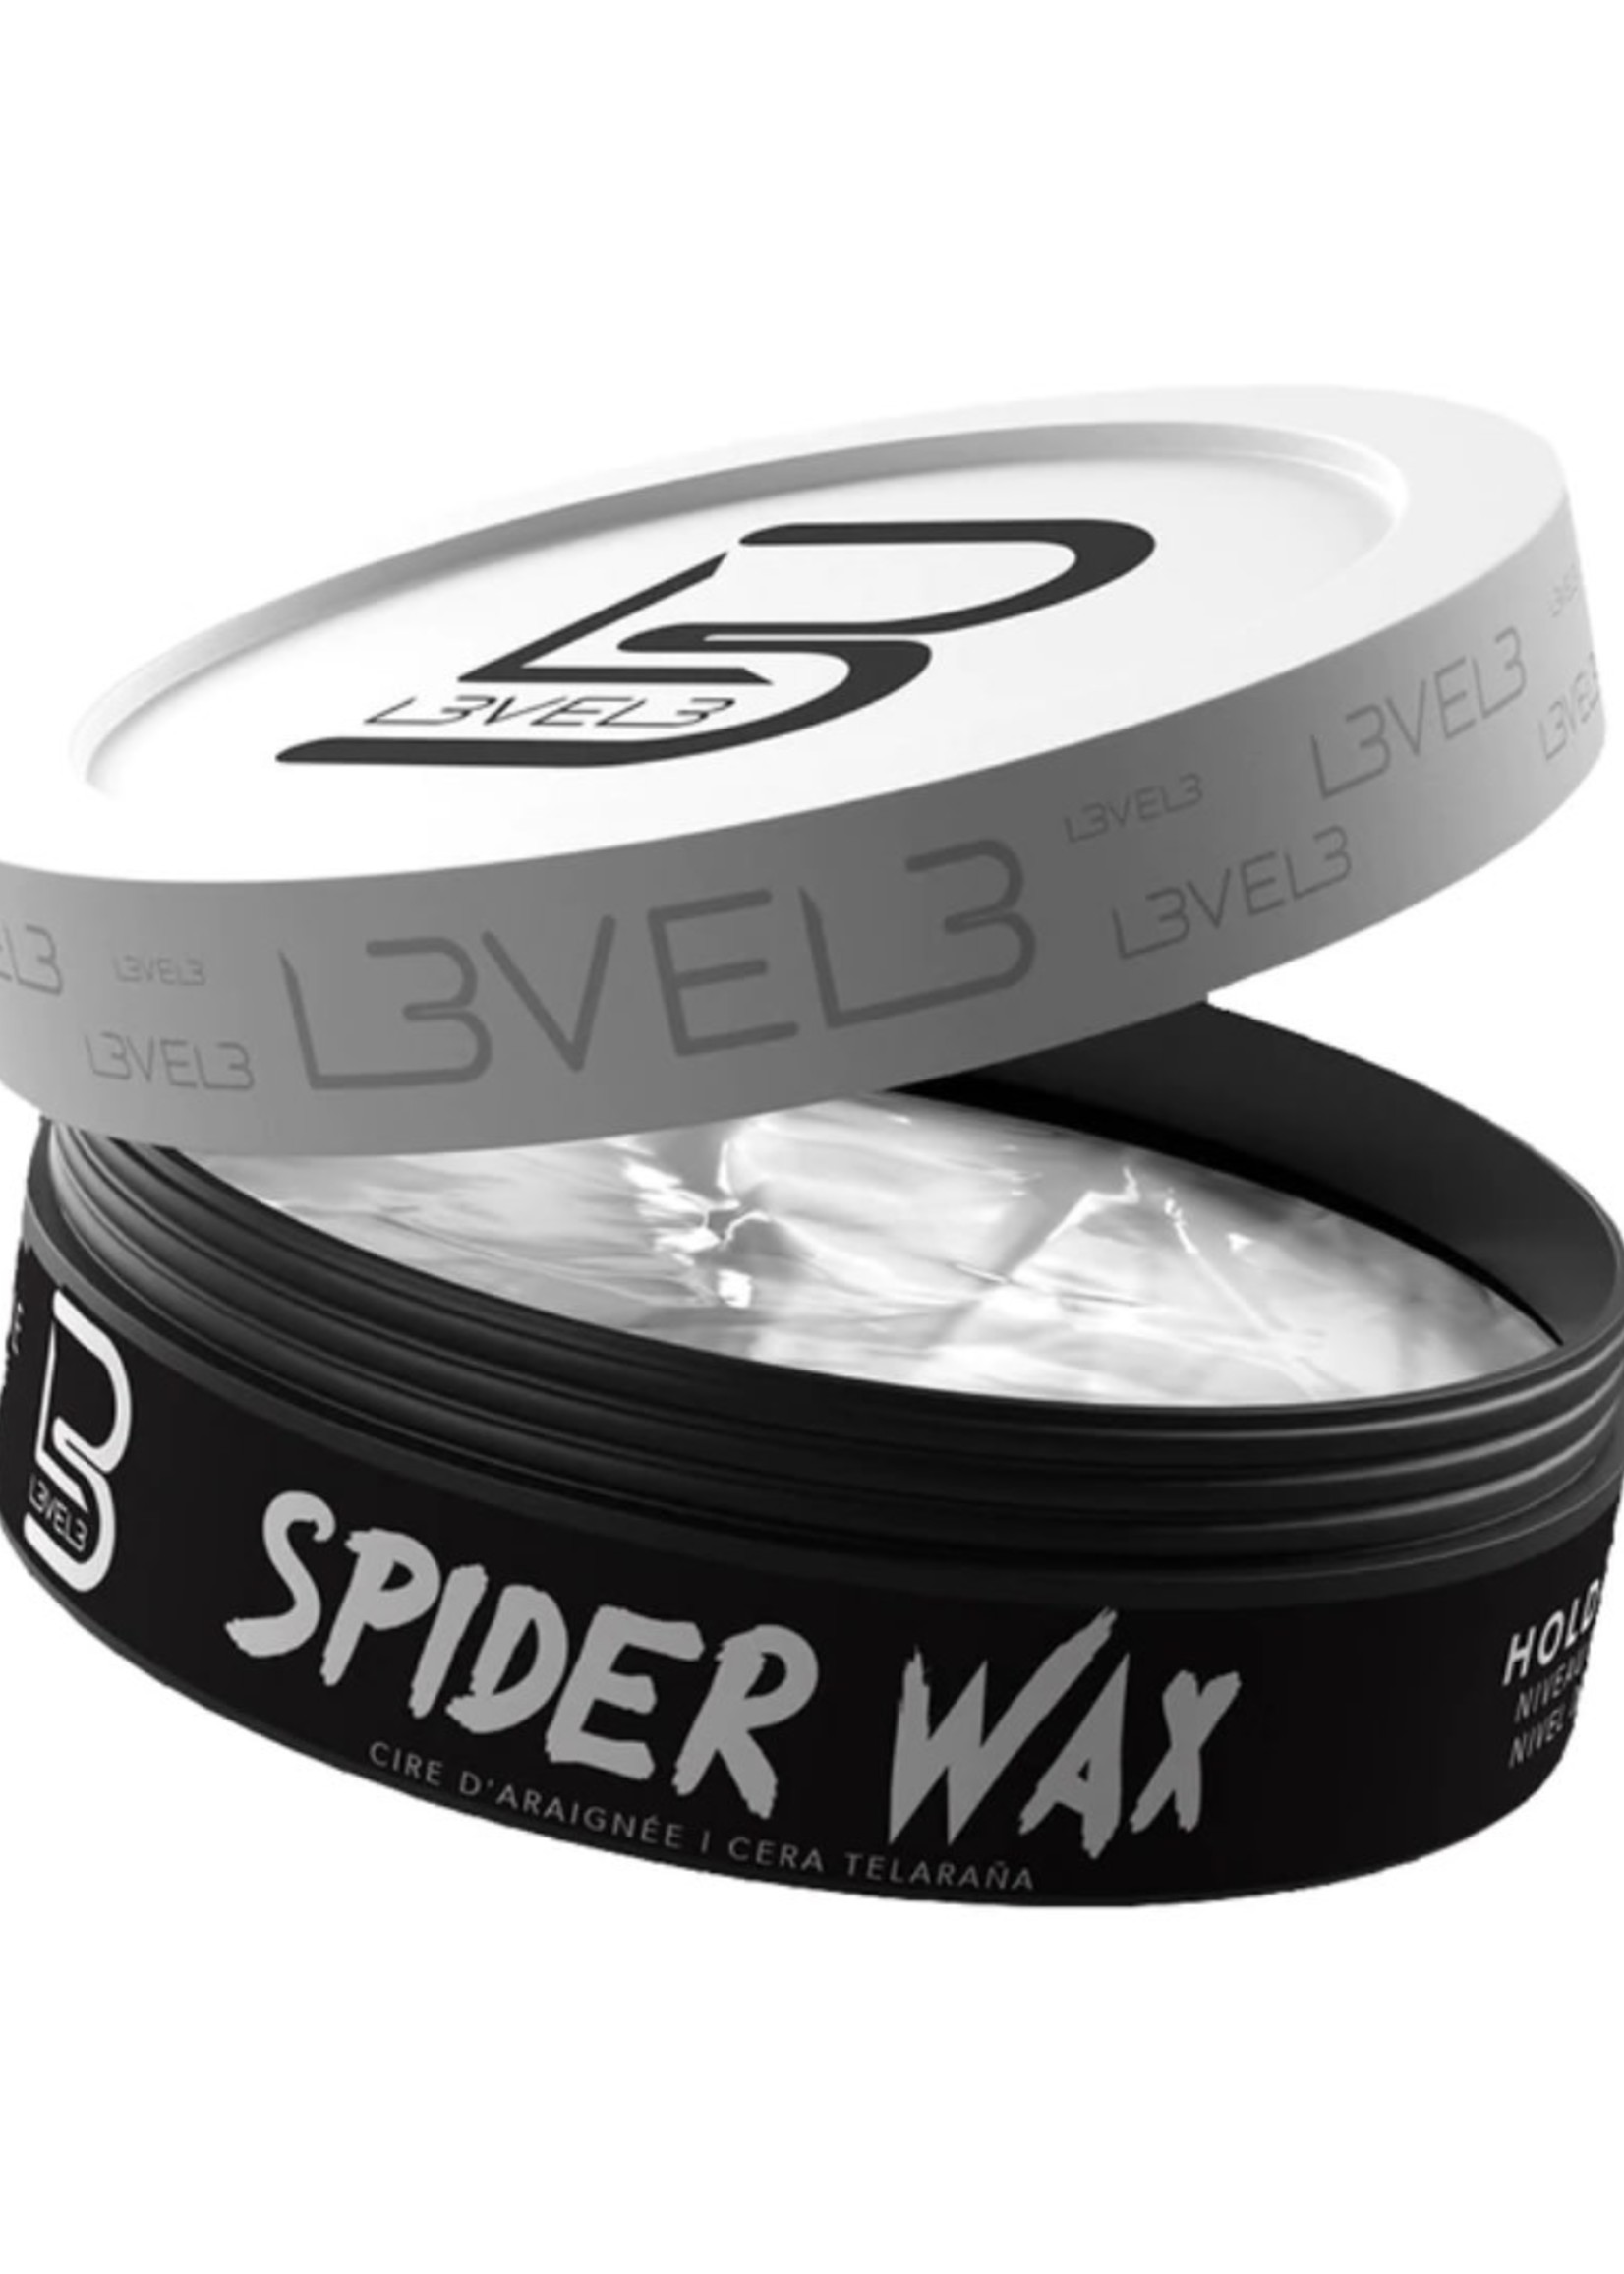 Aqua Spider Wax 150ml - 1 SUPPLY B.V.